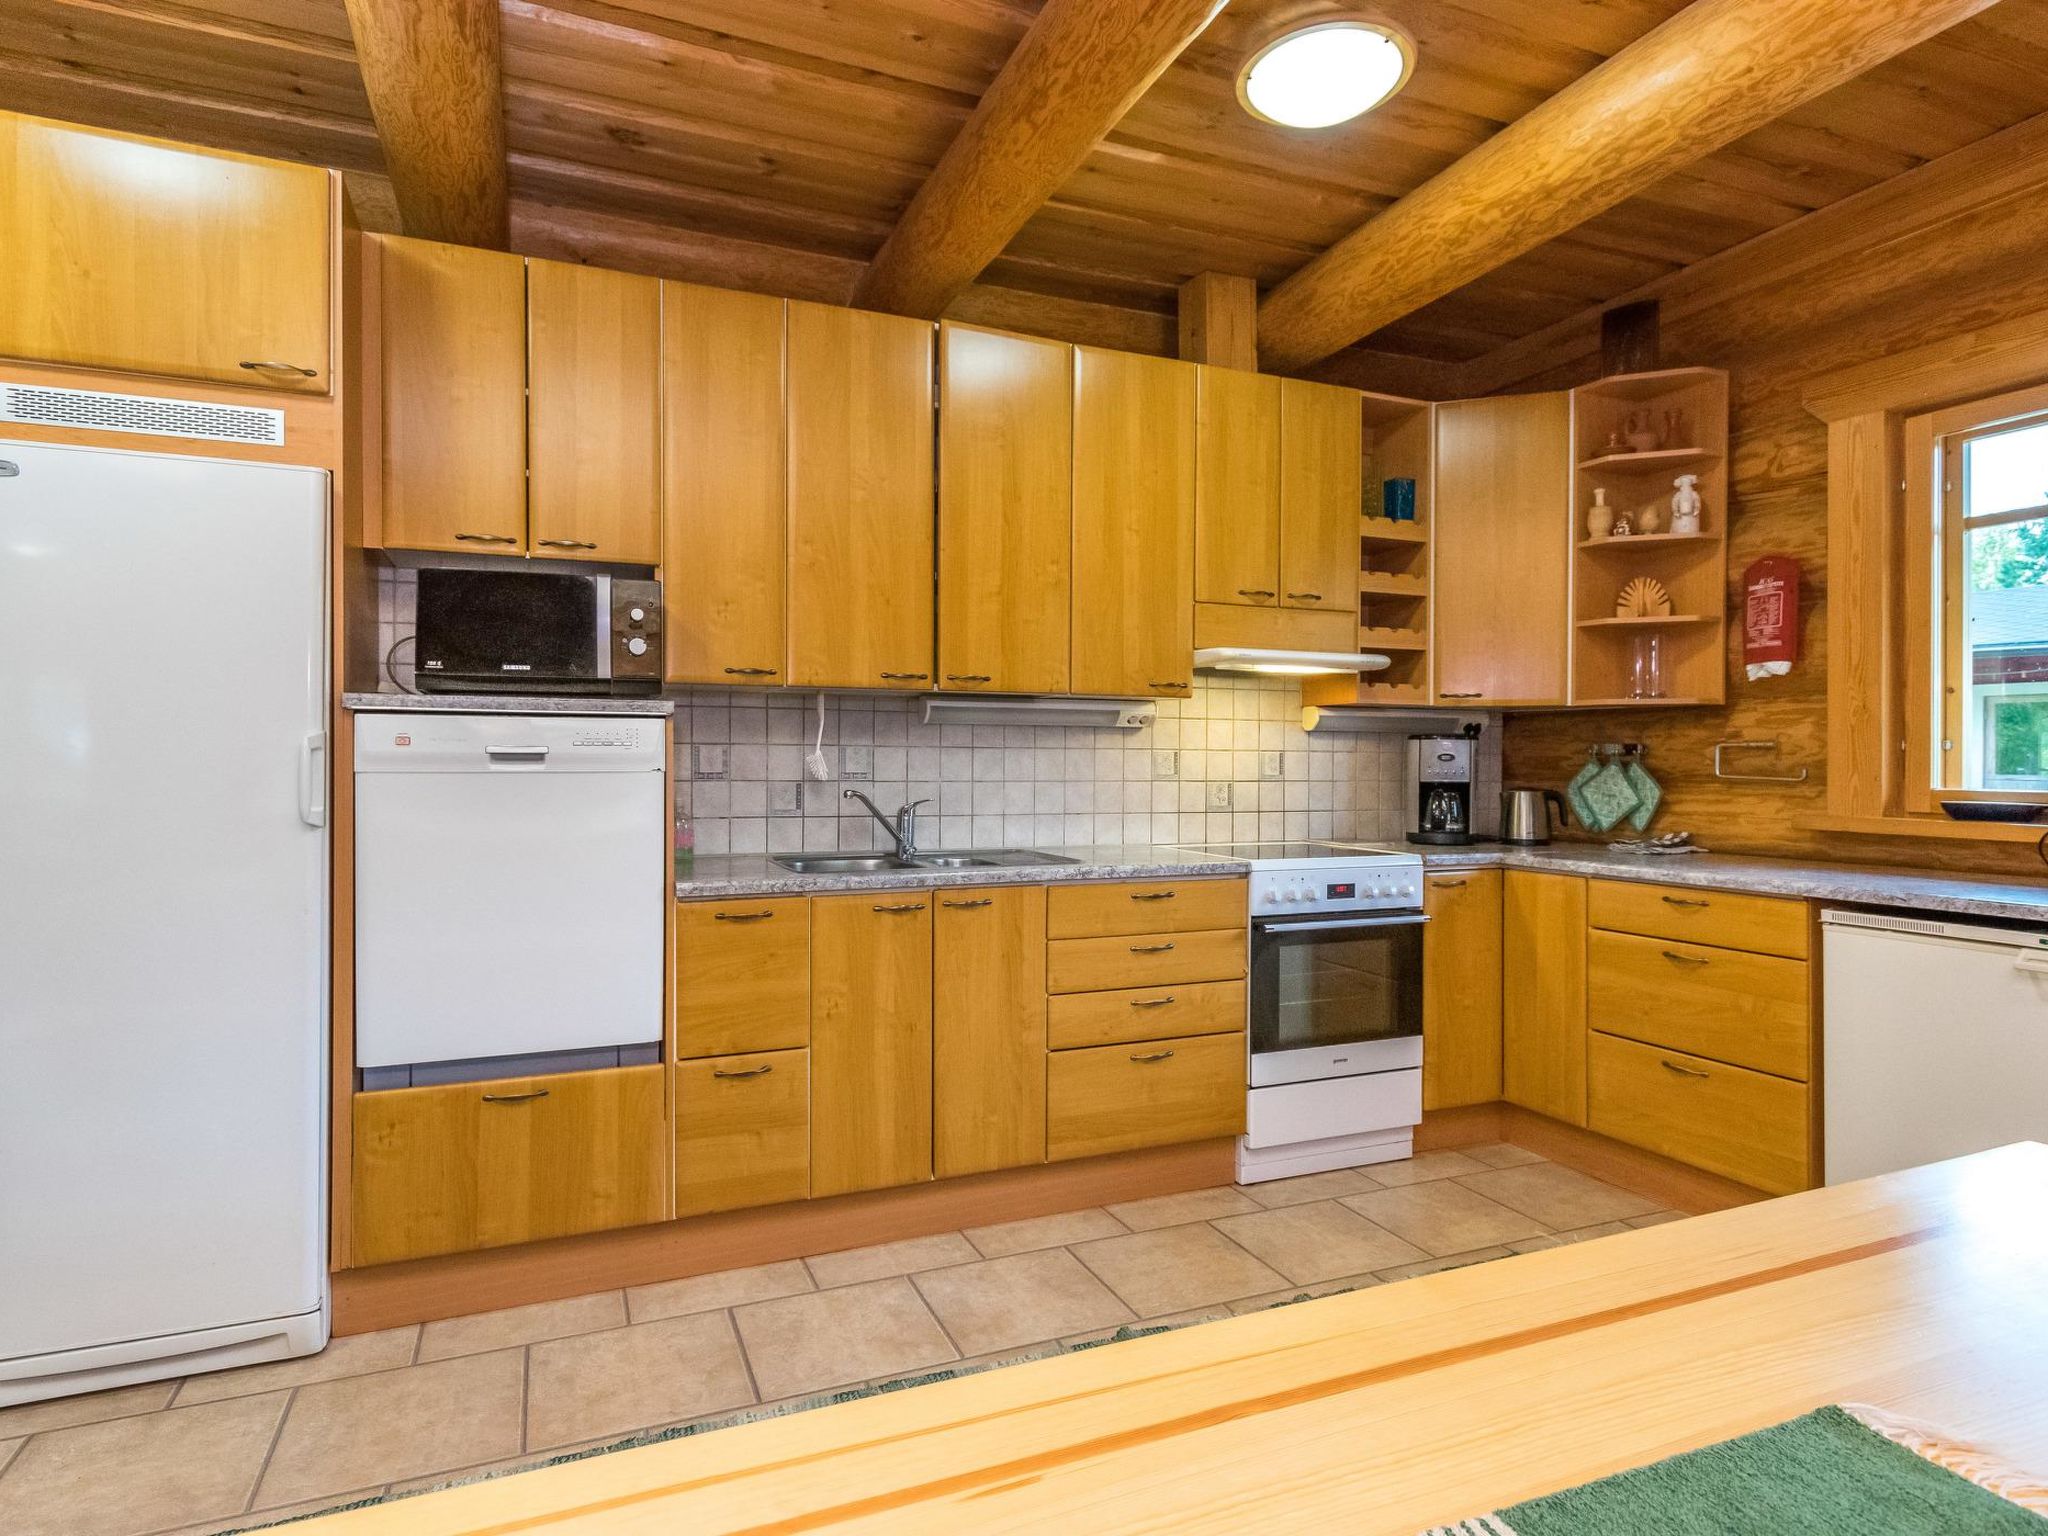 Photo 16 - 6 bedroom House in Mikkeli with sauna